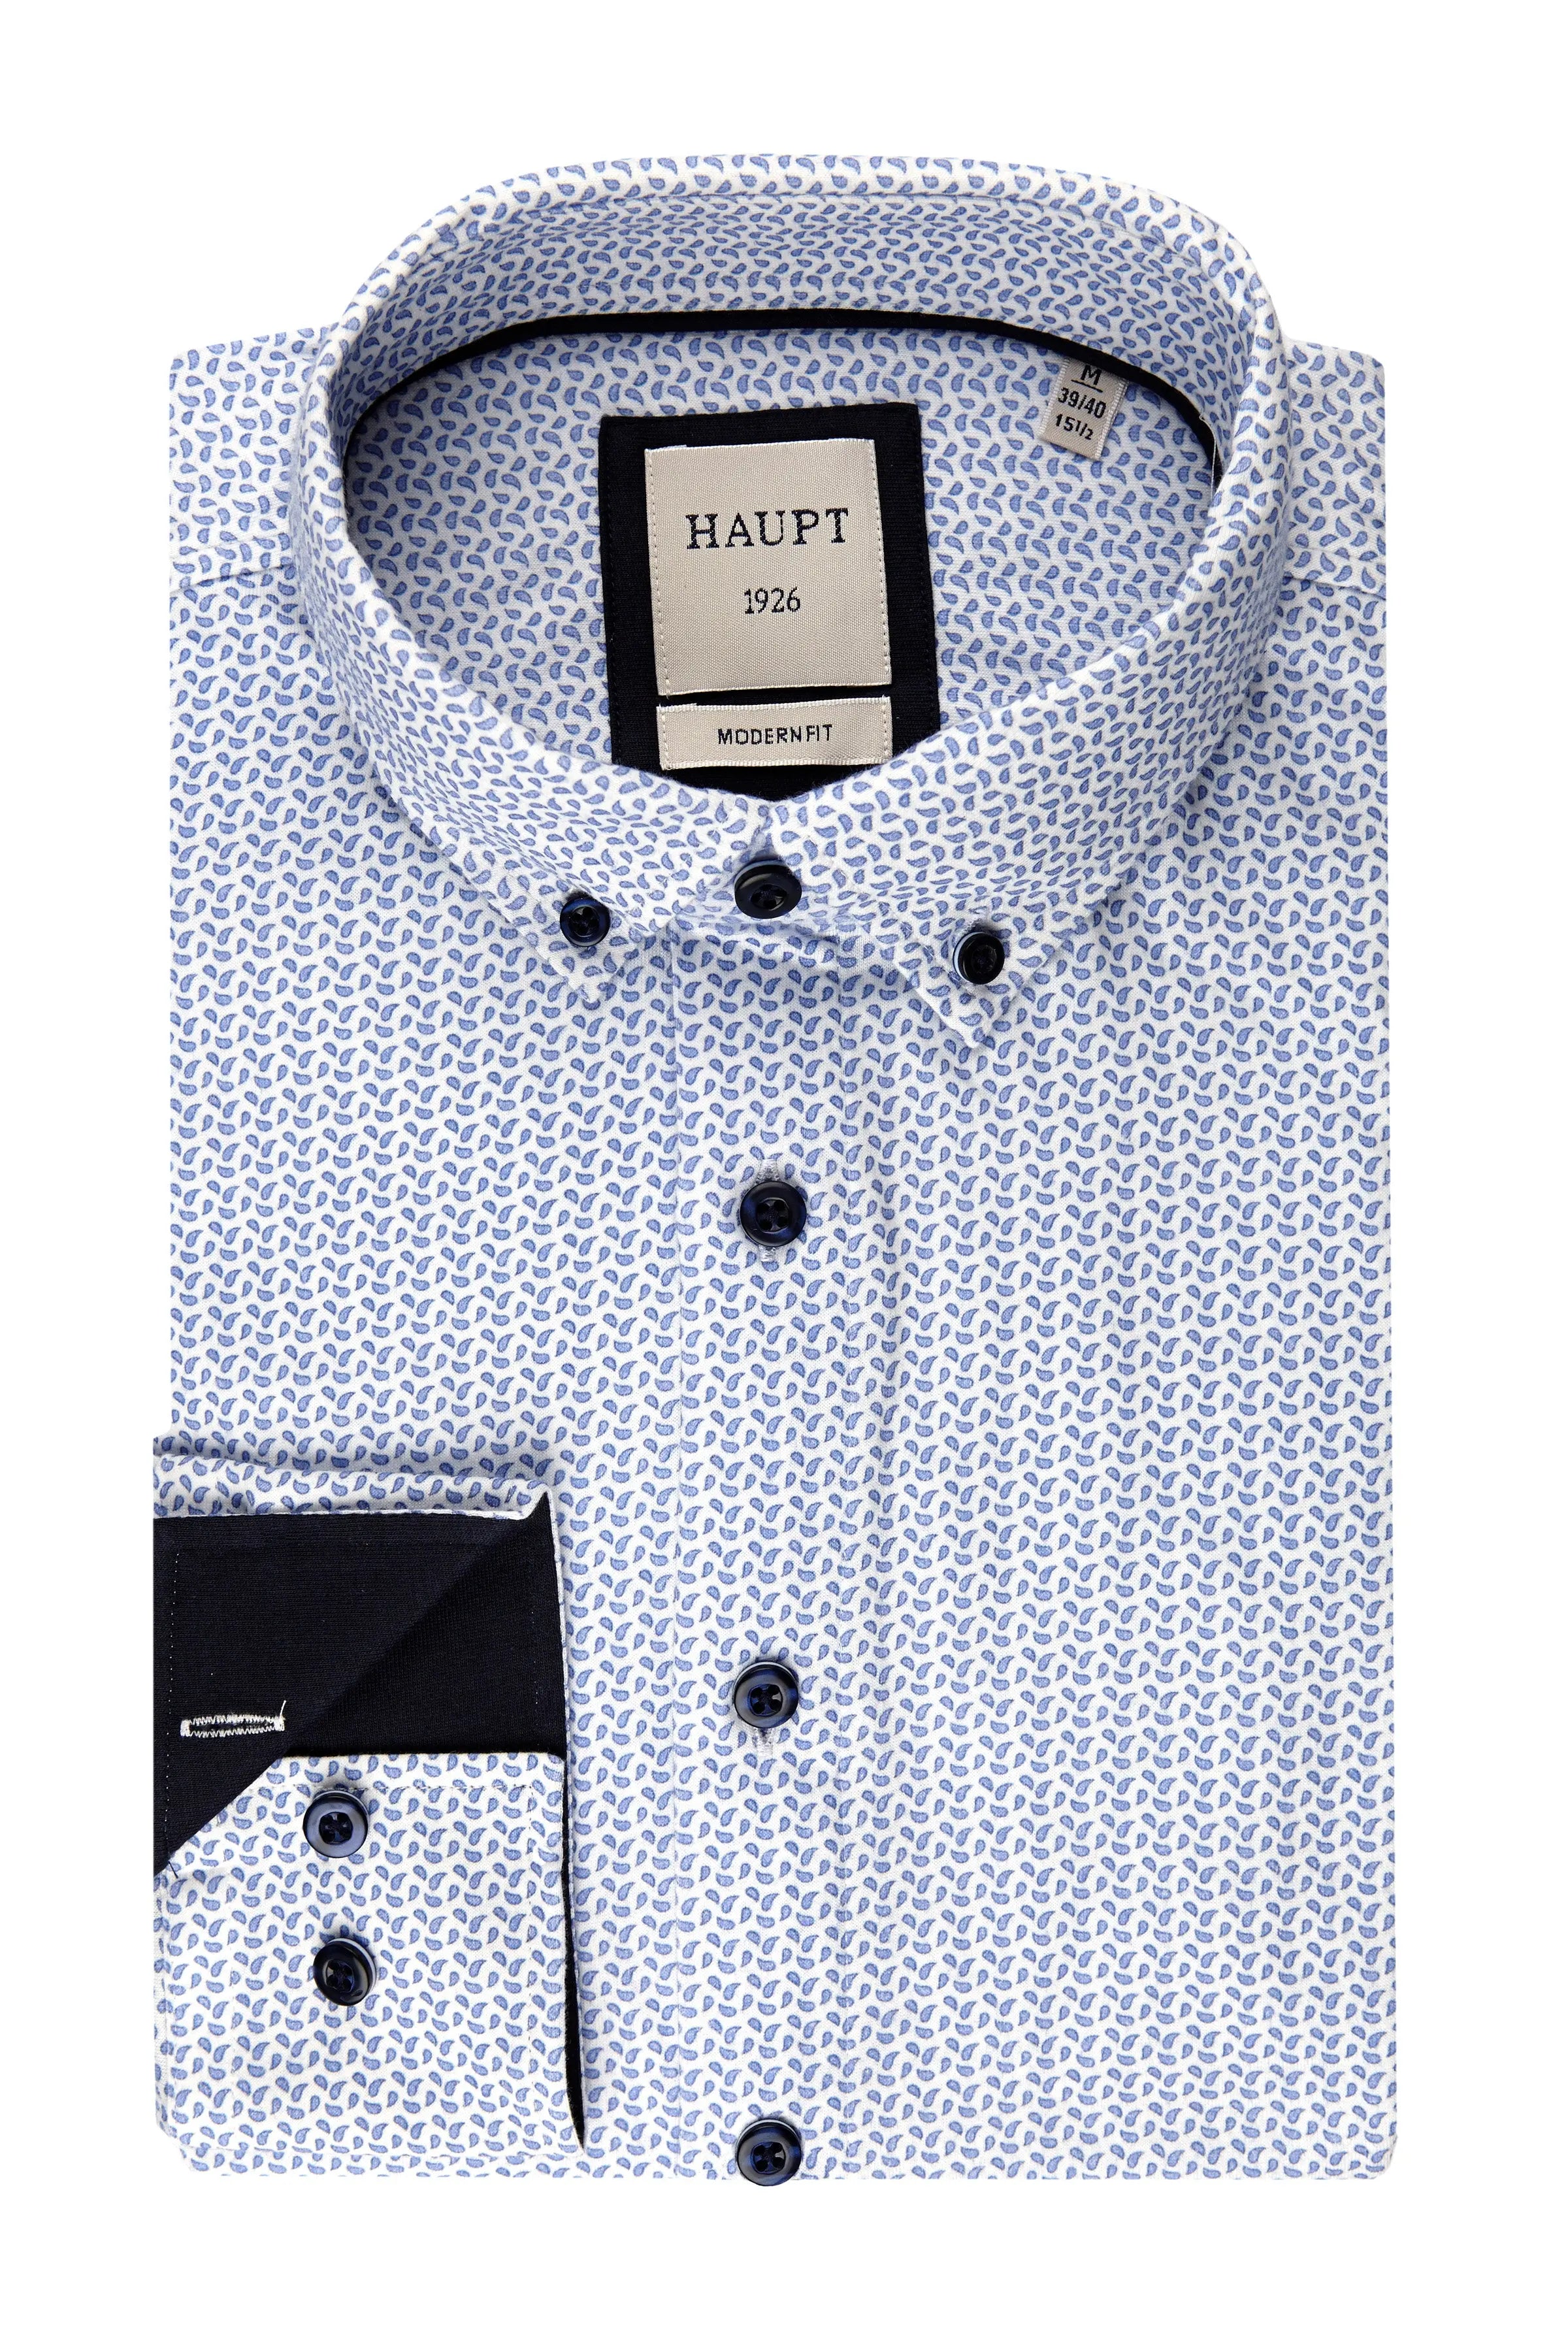 Baumwoll-Herrenhemd light blue print Haupt